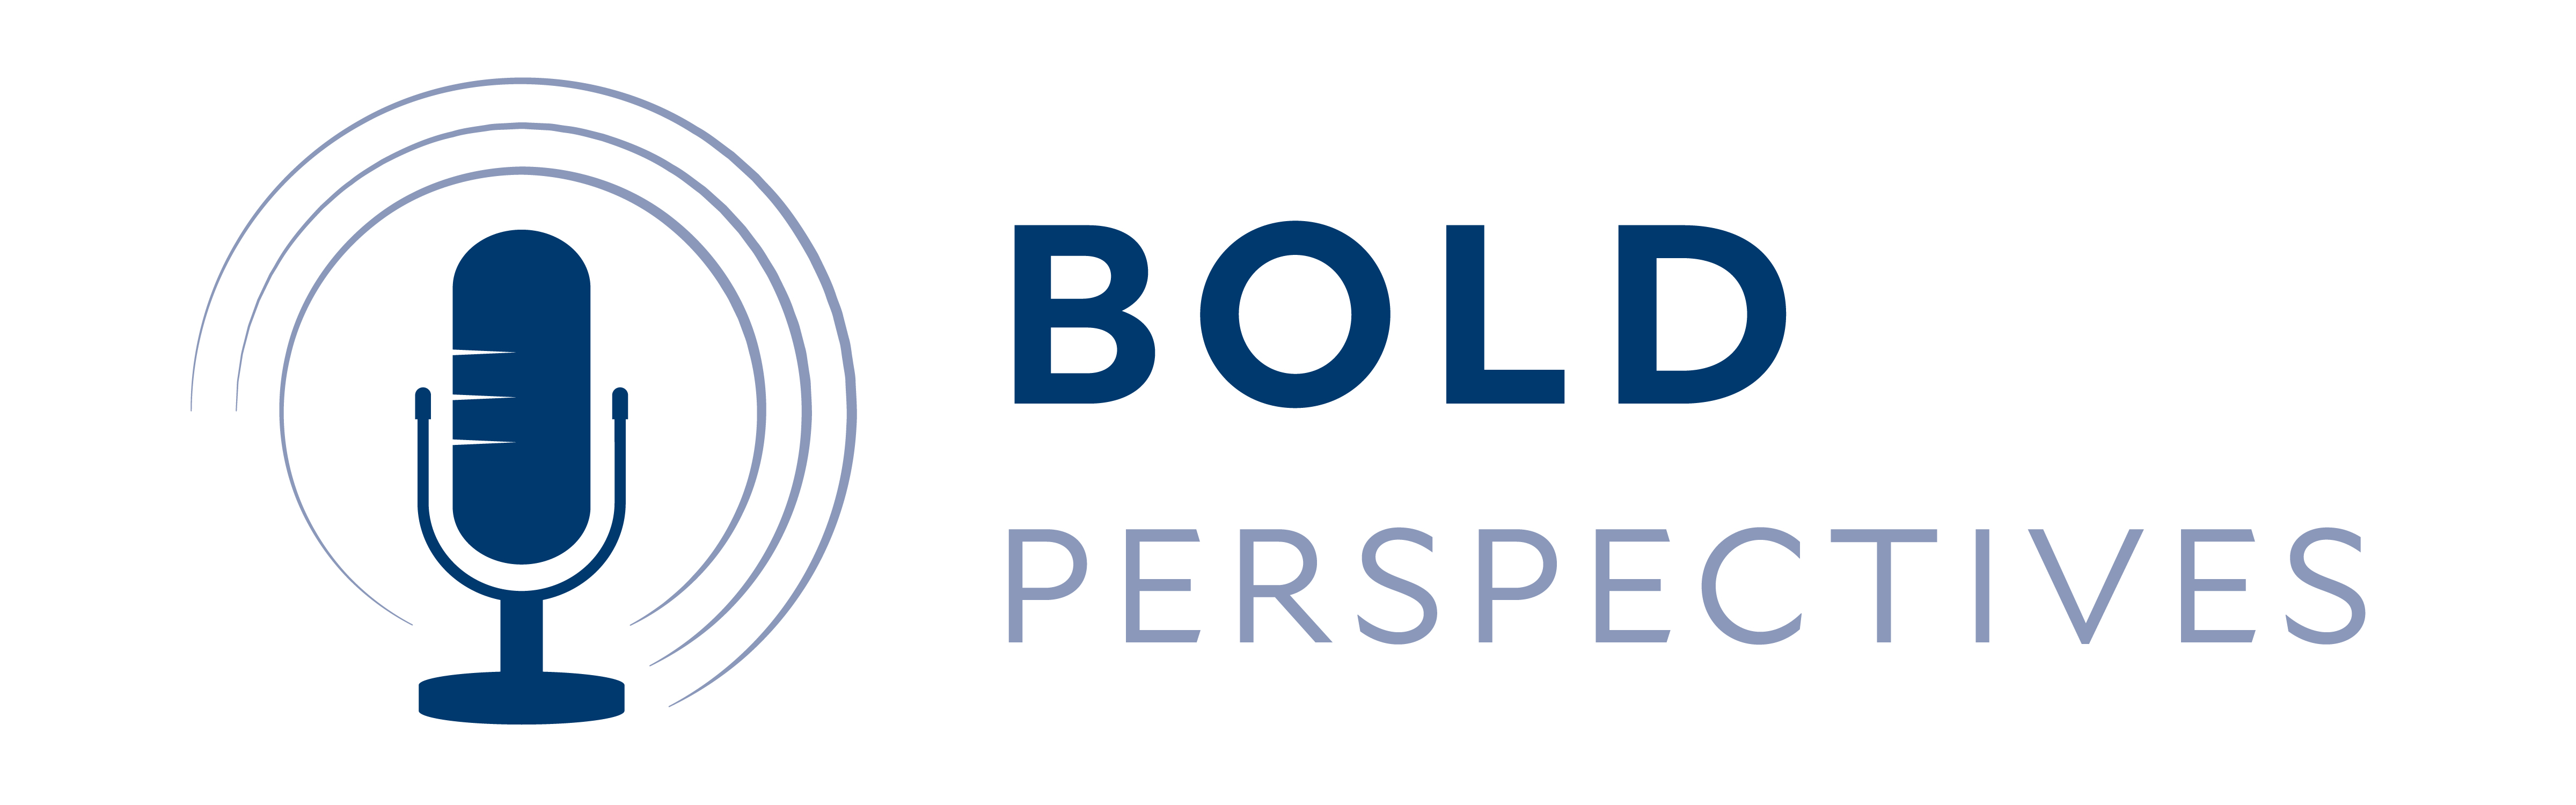 BOLD Perspectives logo